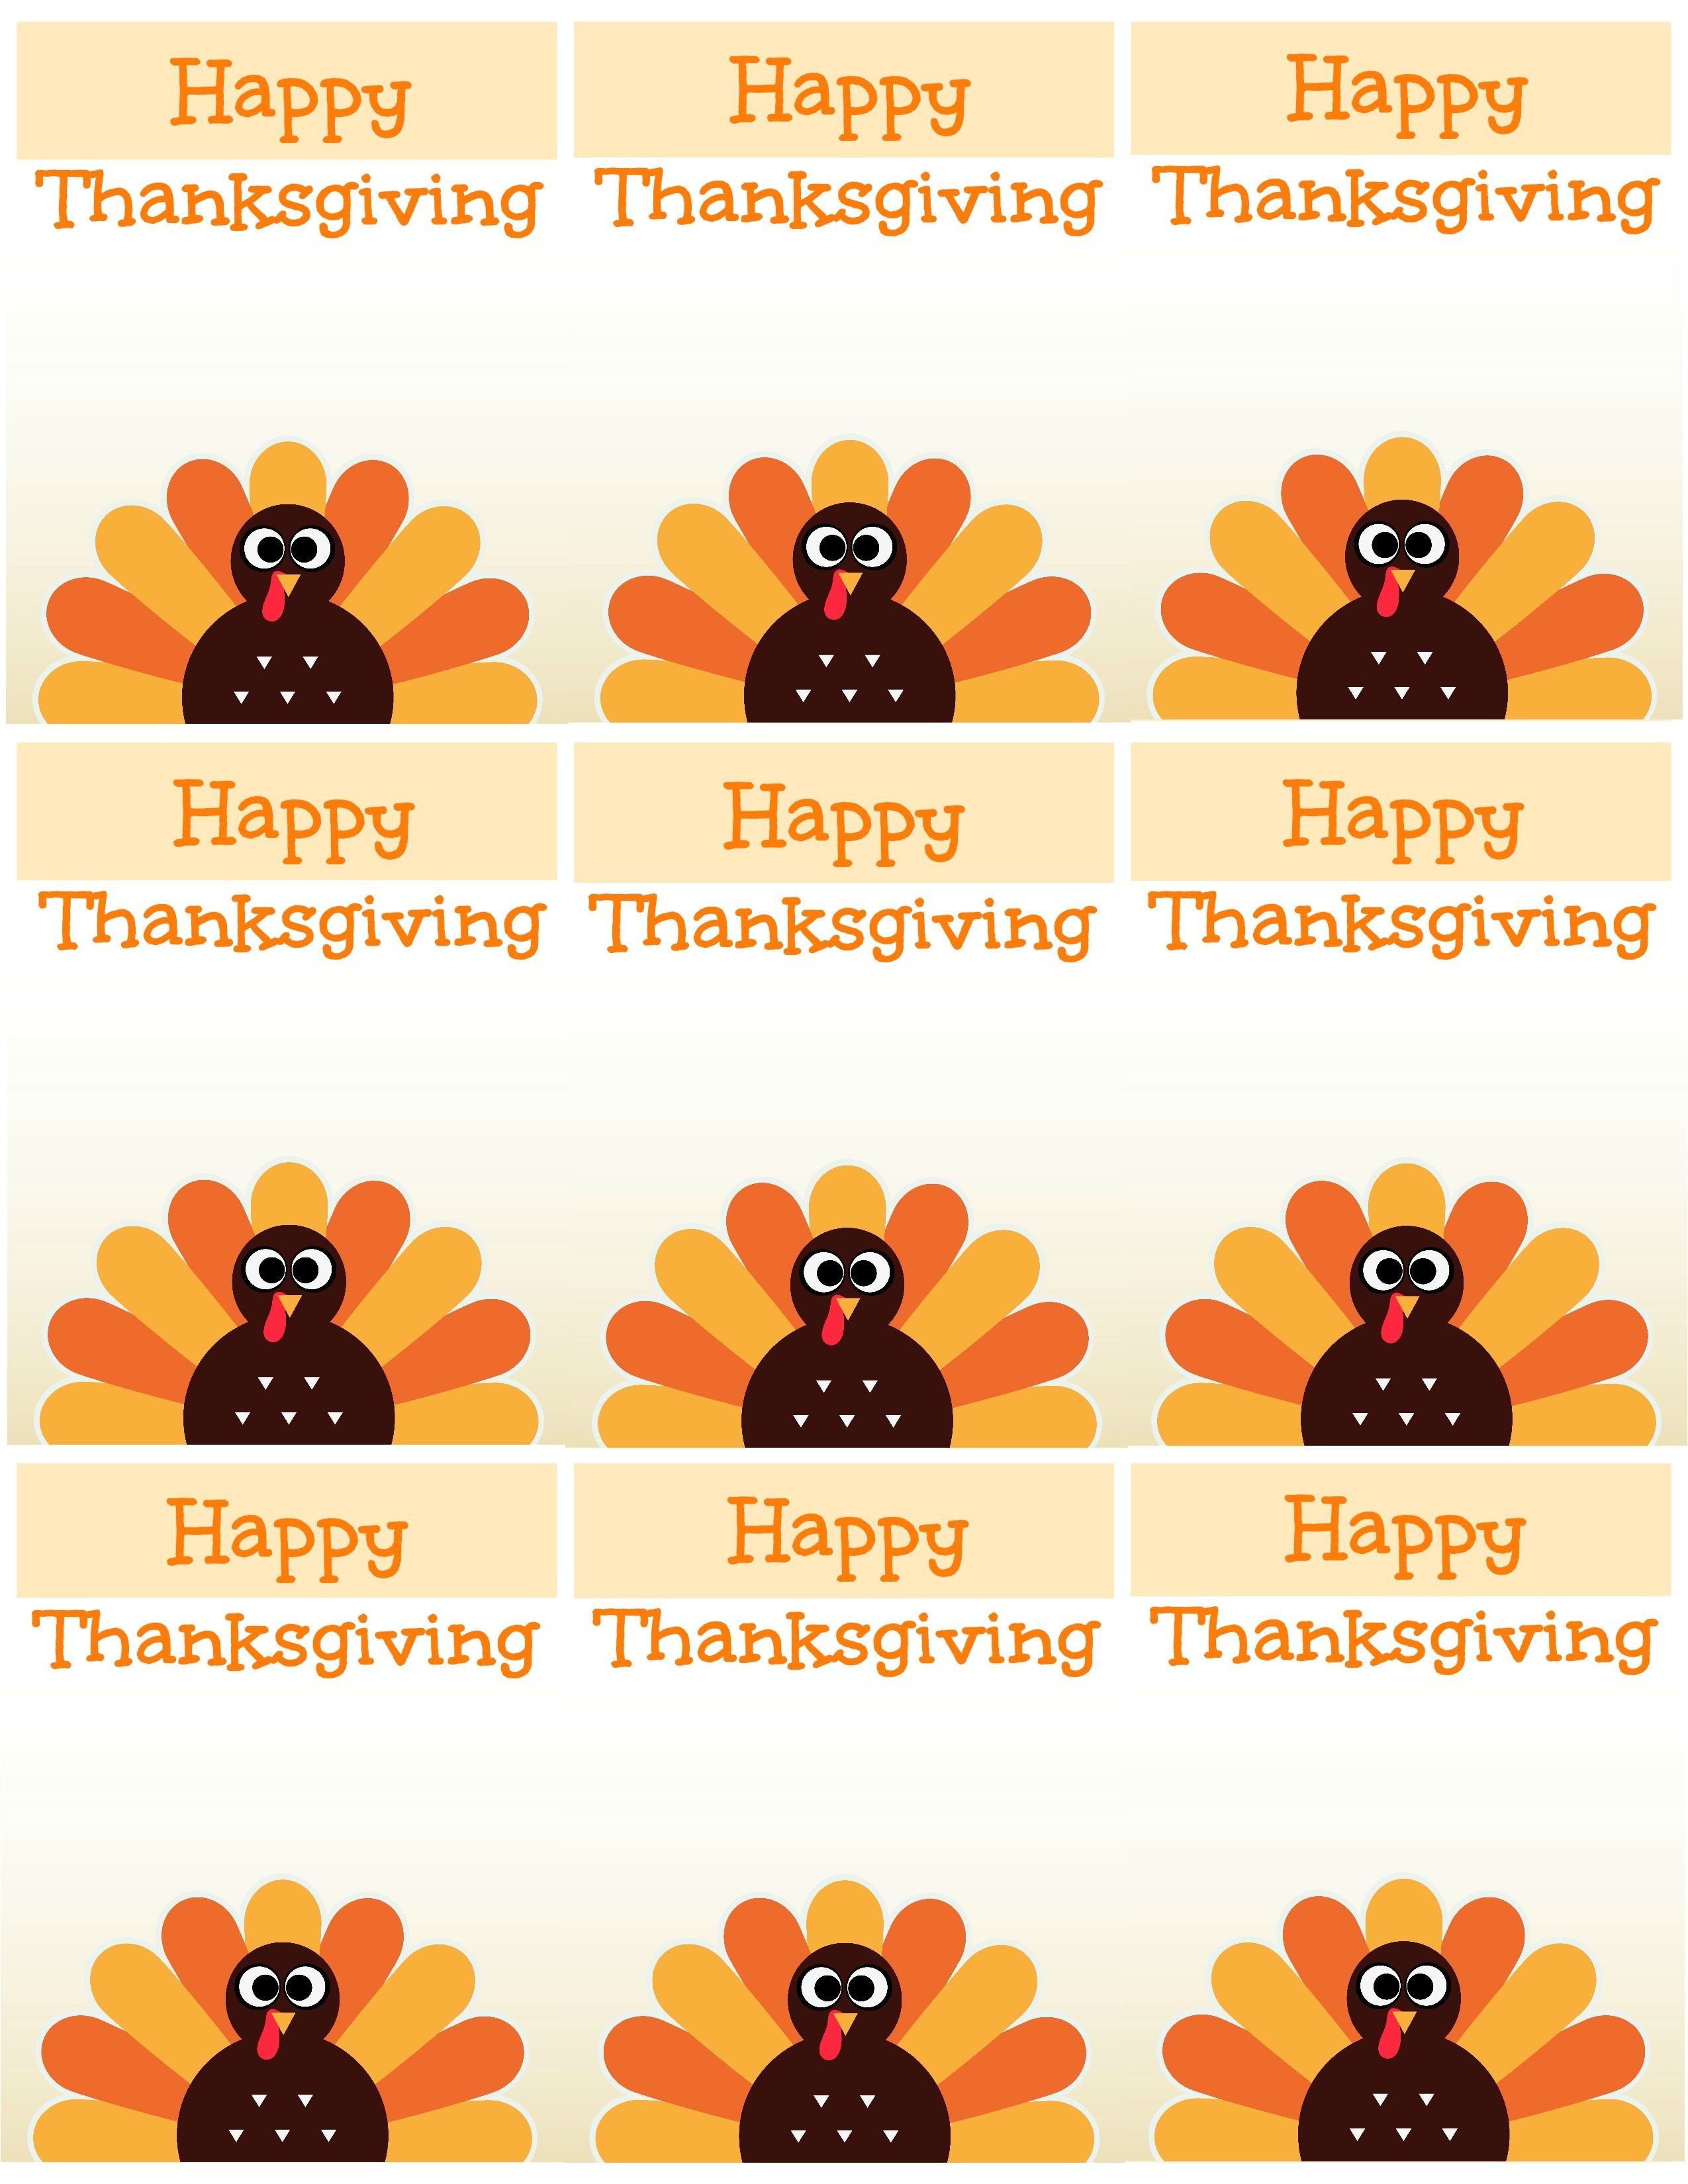 Happy Thanksgiving Cards Free Printable Free Printable